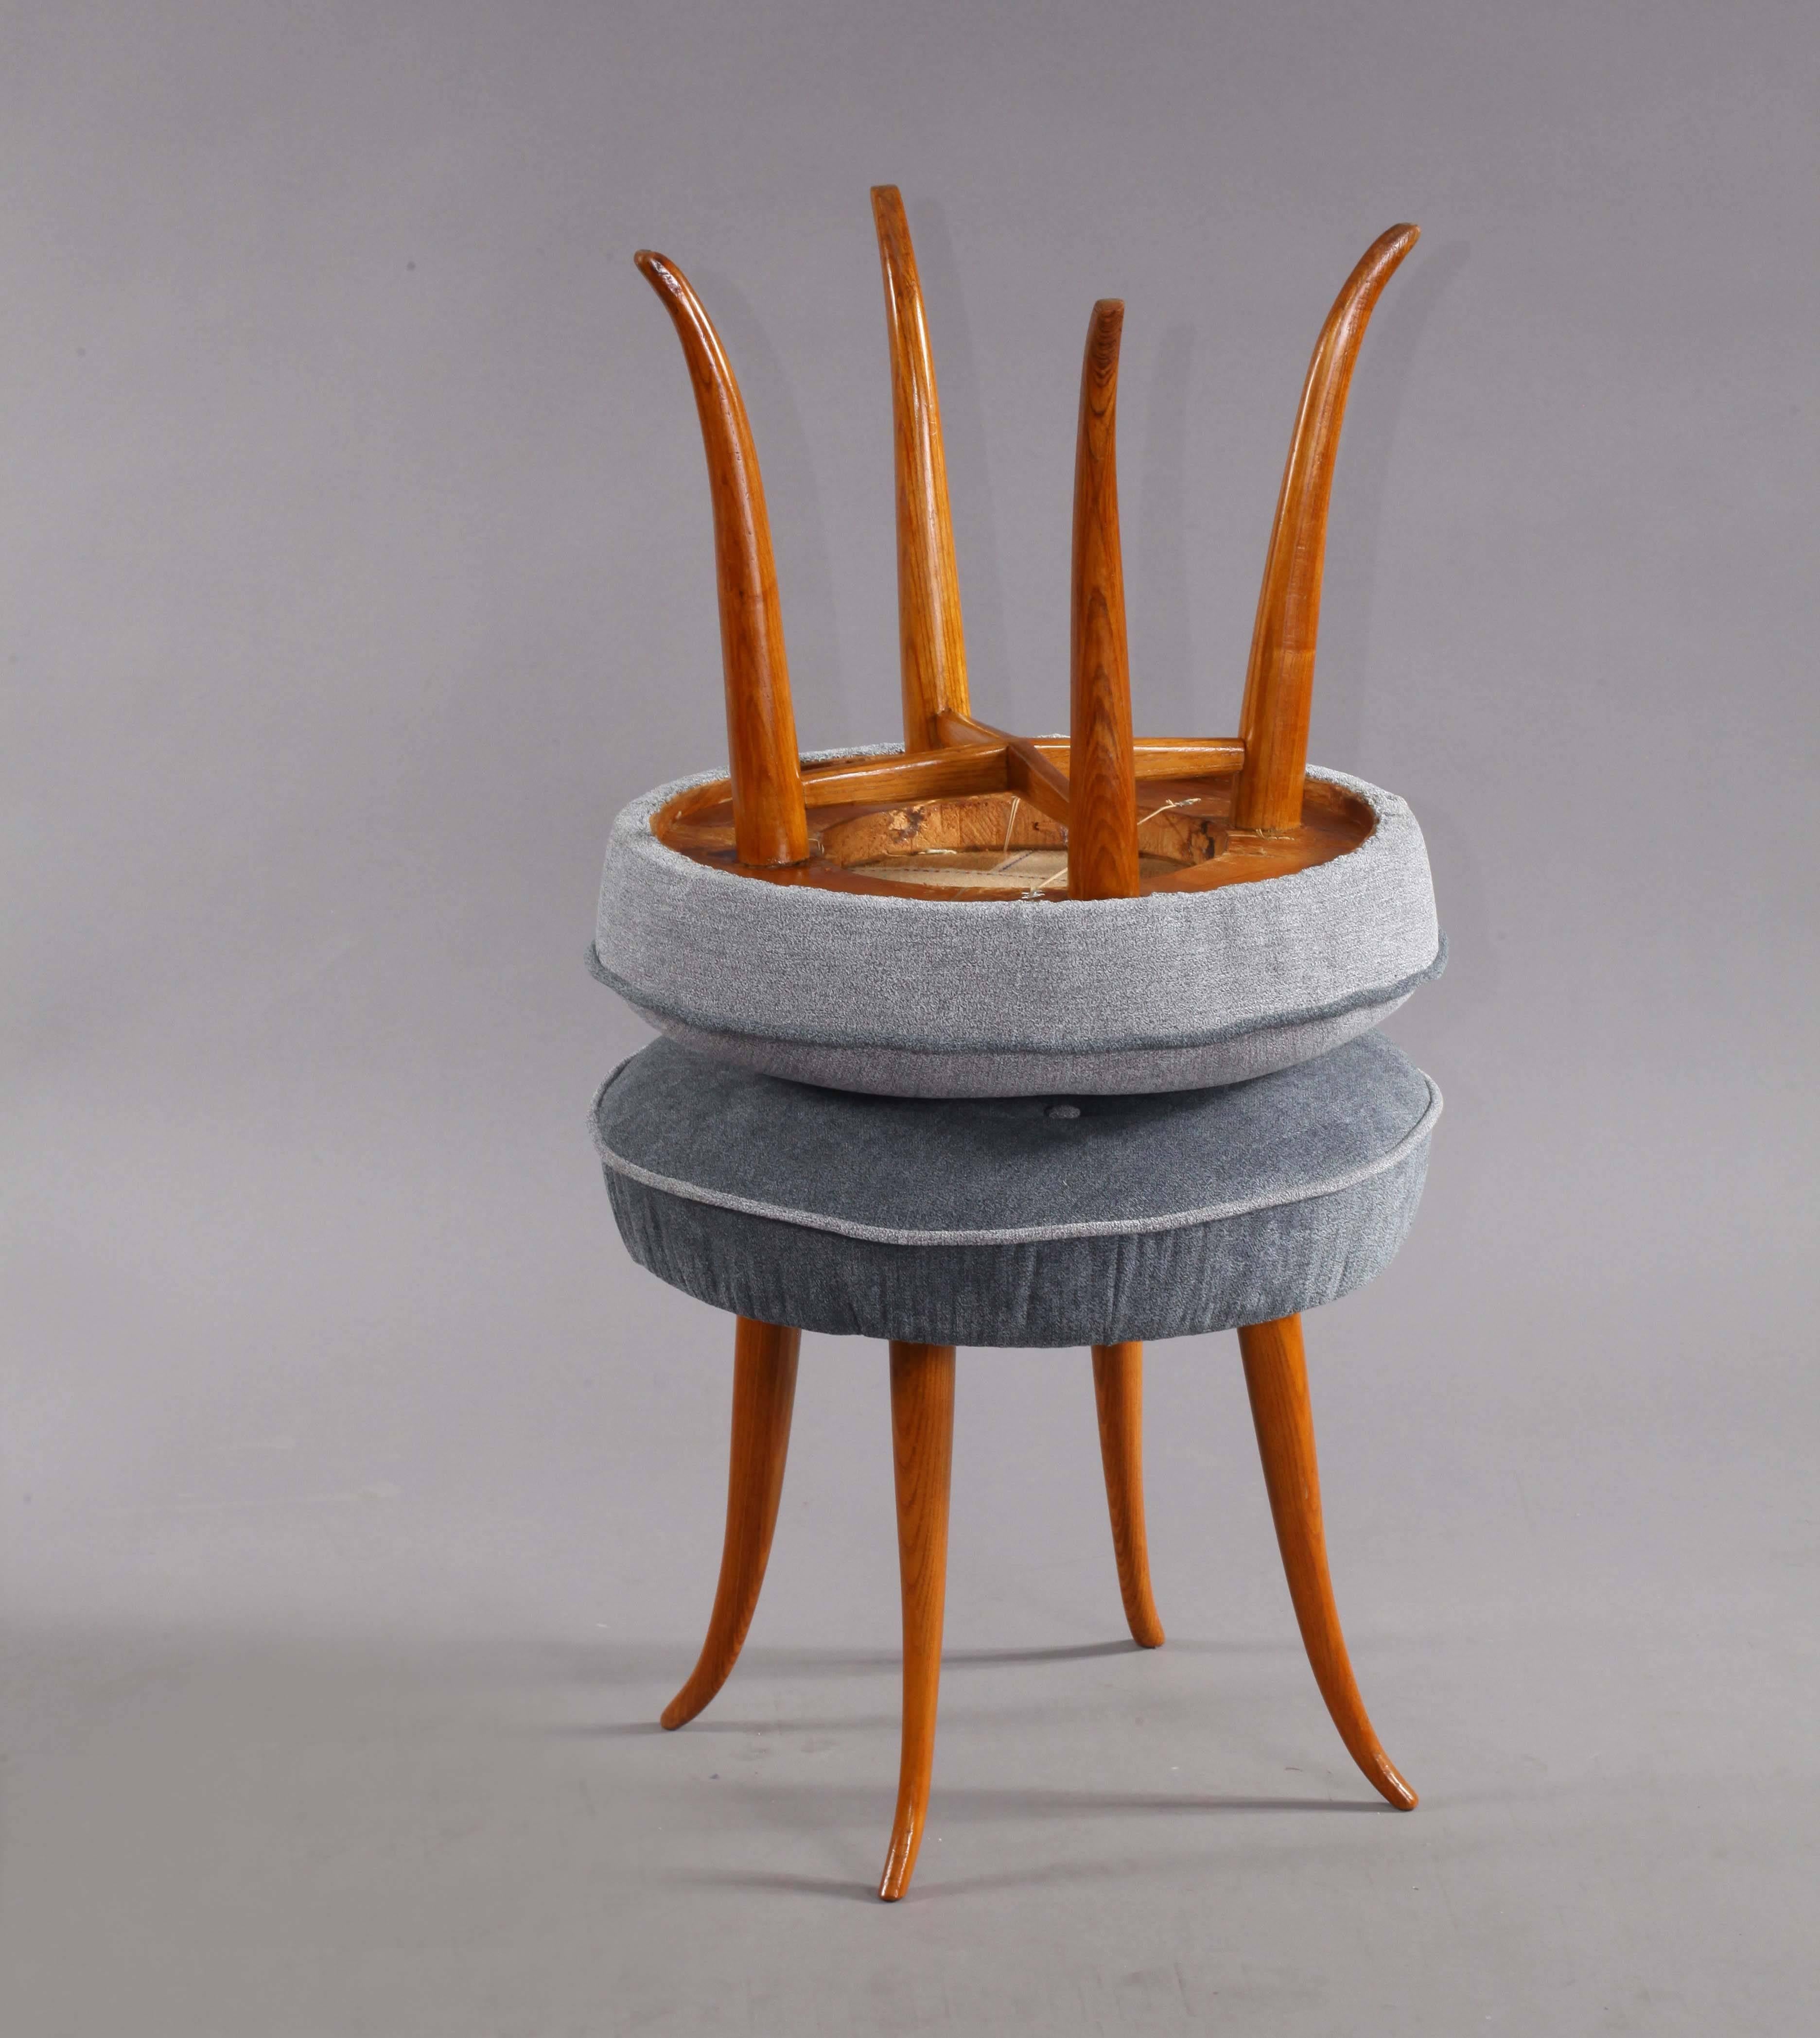 Pair of stools,
attributed to Josef Frank,
Vienna, 1950.
Gray fabric, beech legs.